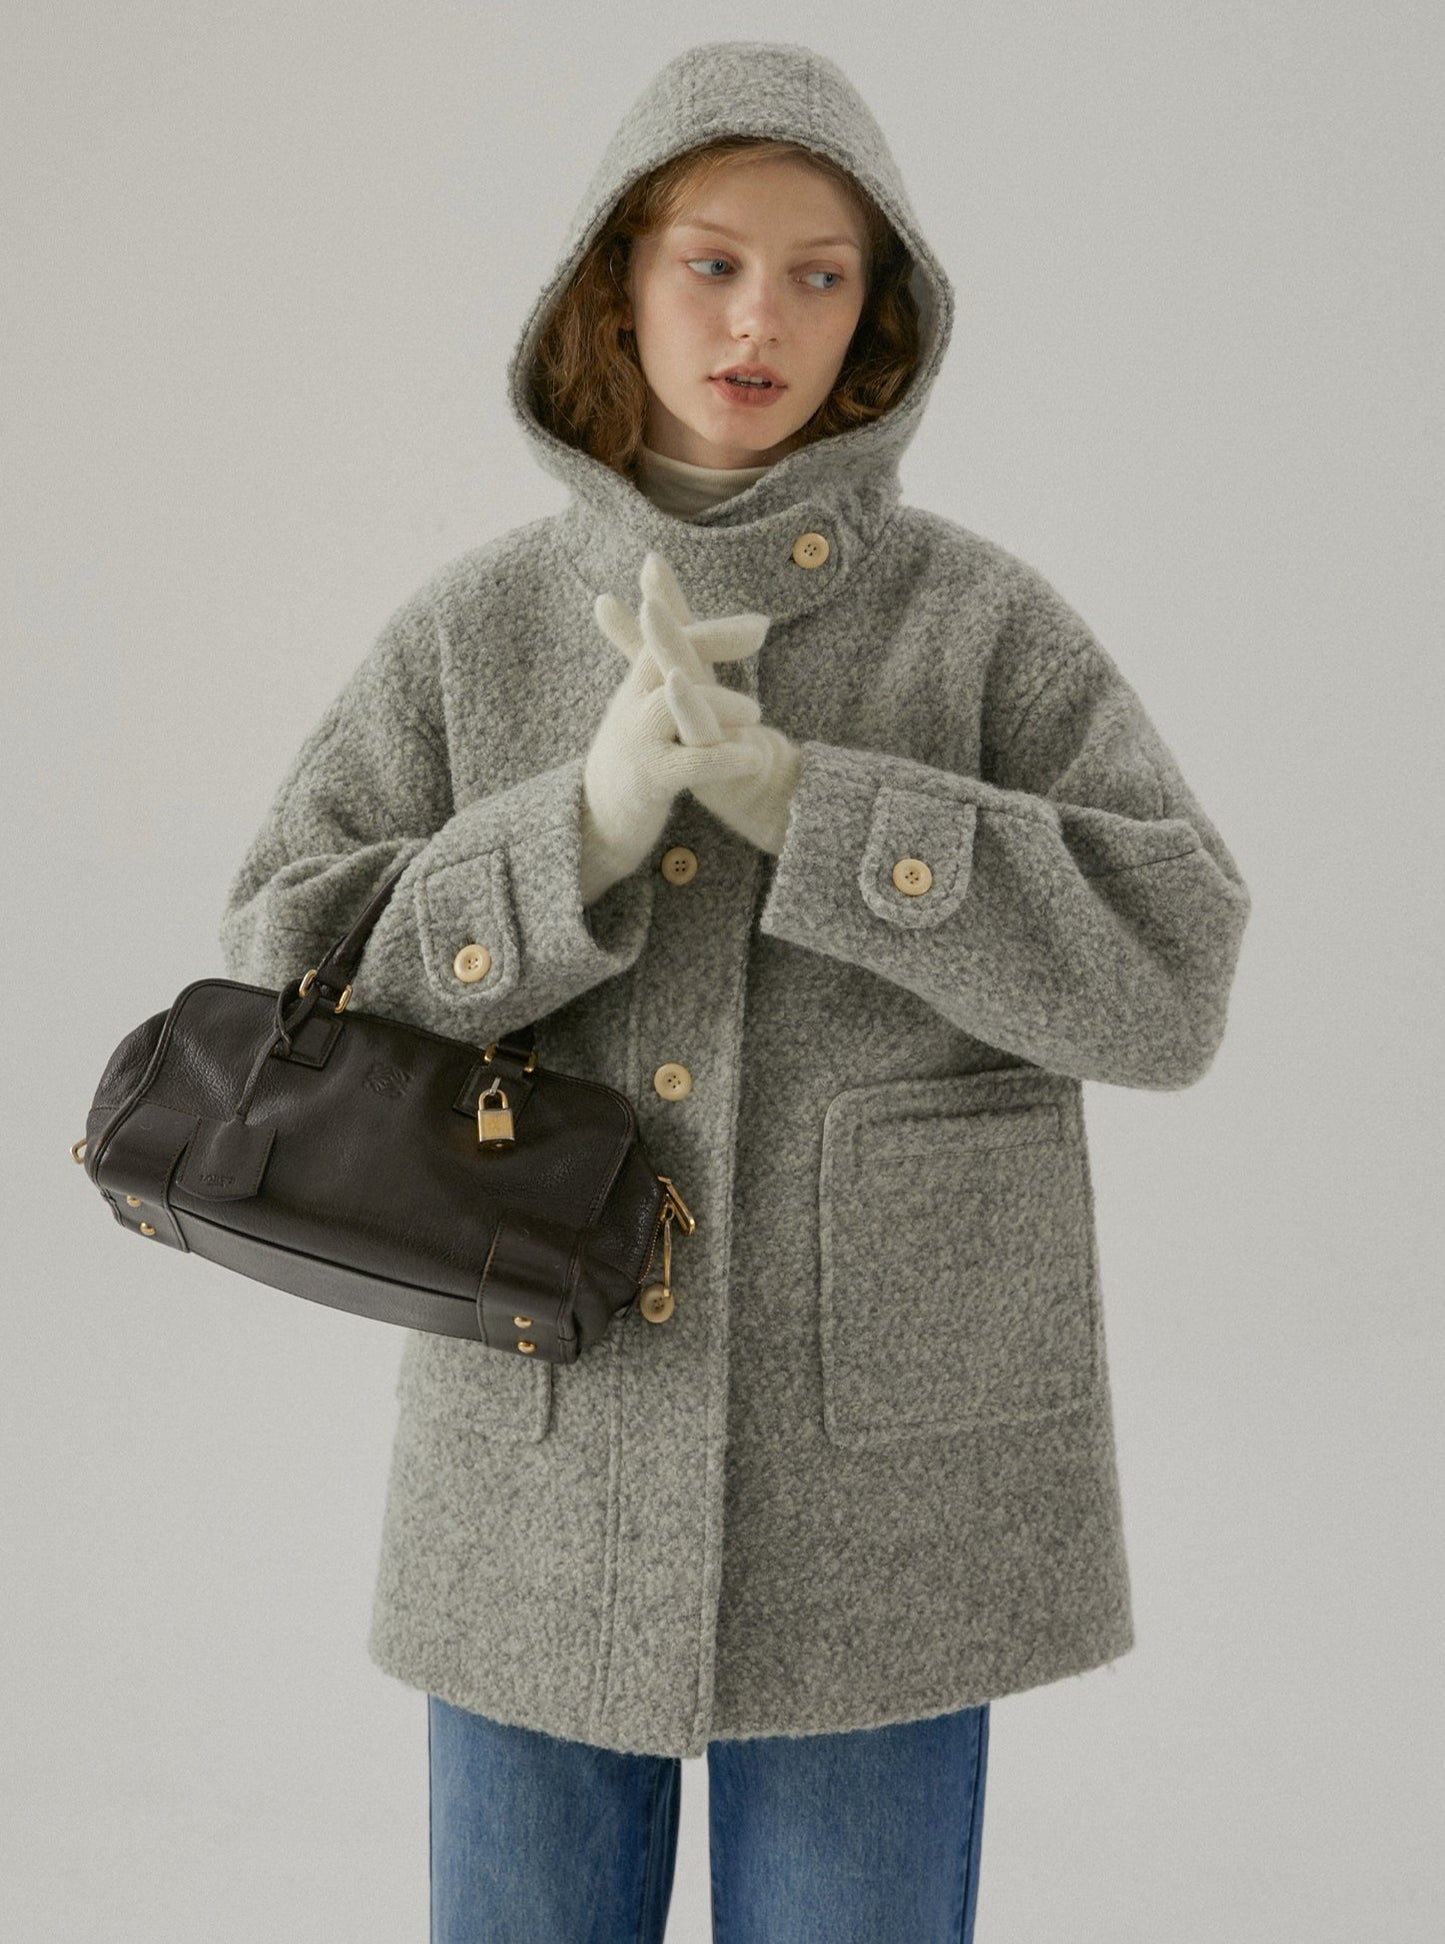 Vintage -Wolle dicker Mantel